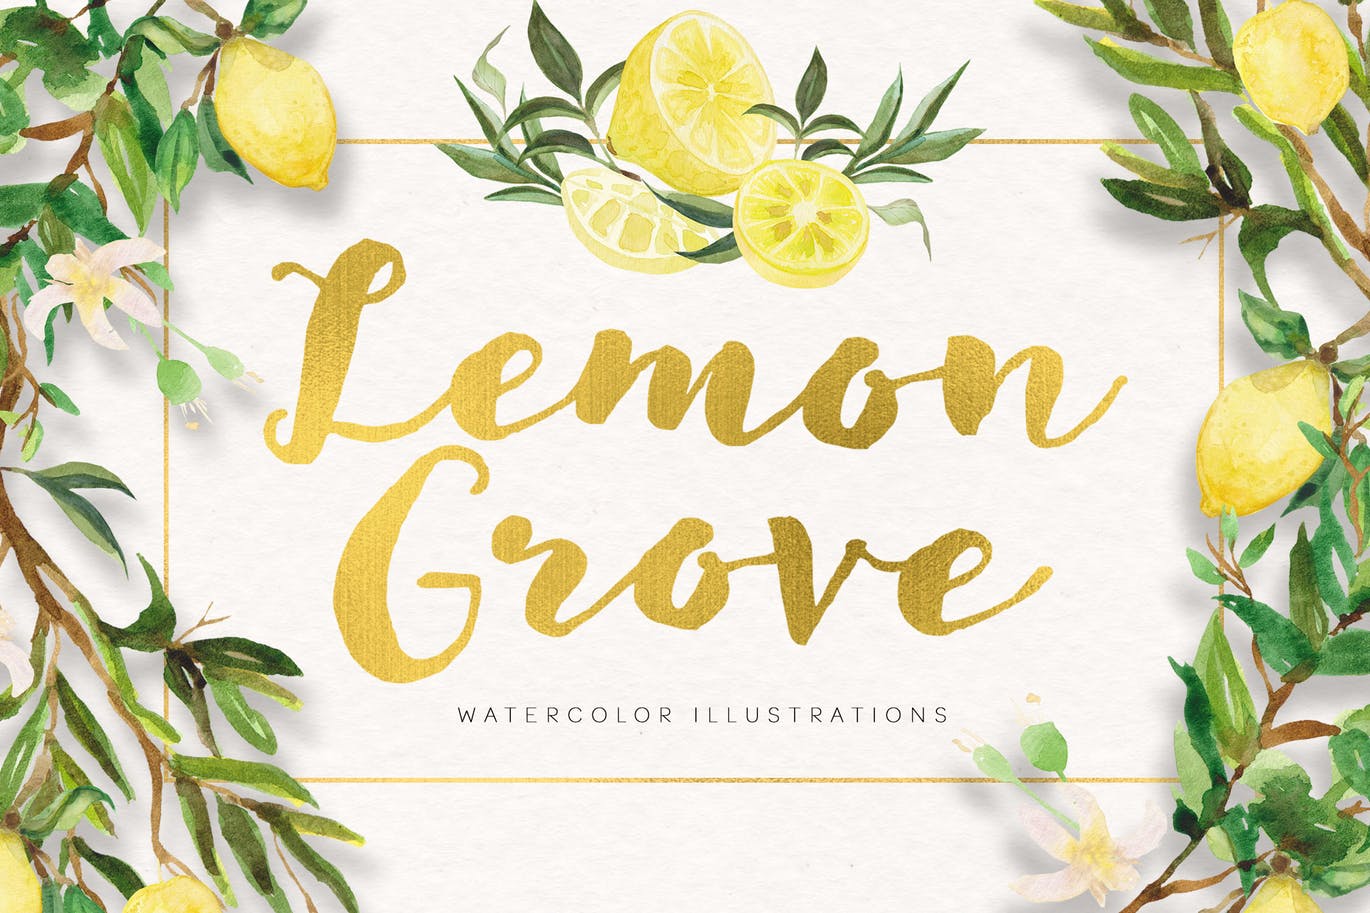 柠檬树水彩手绘矢量插画素材库精选素材 Lemon Grove Watercolor Illustrations插图